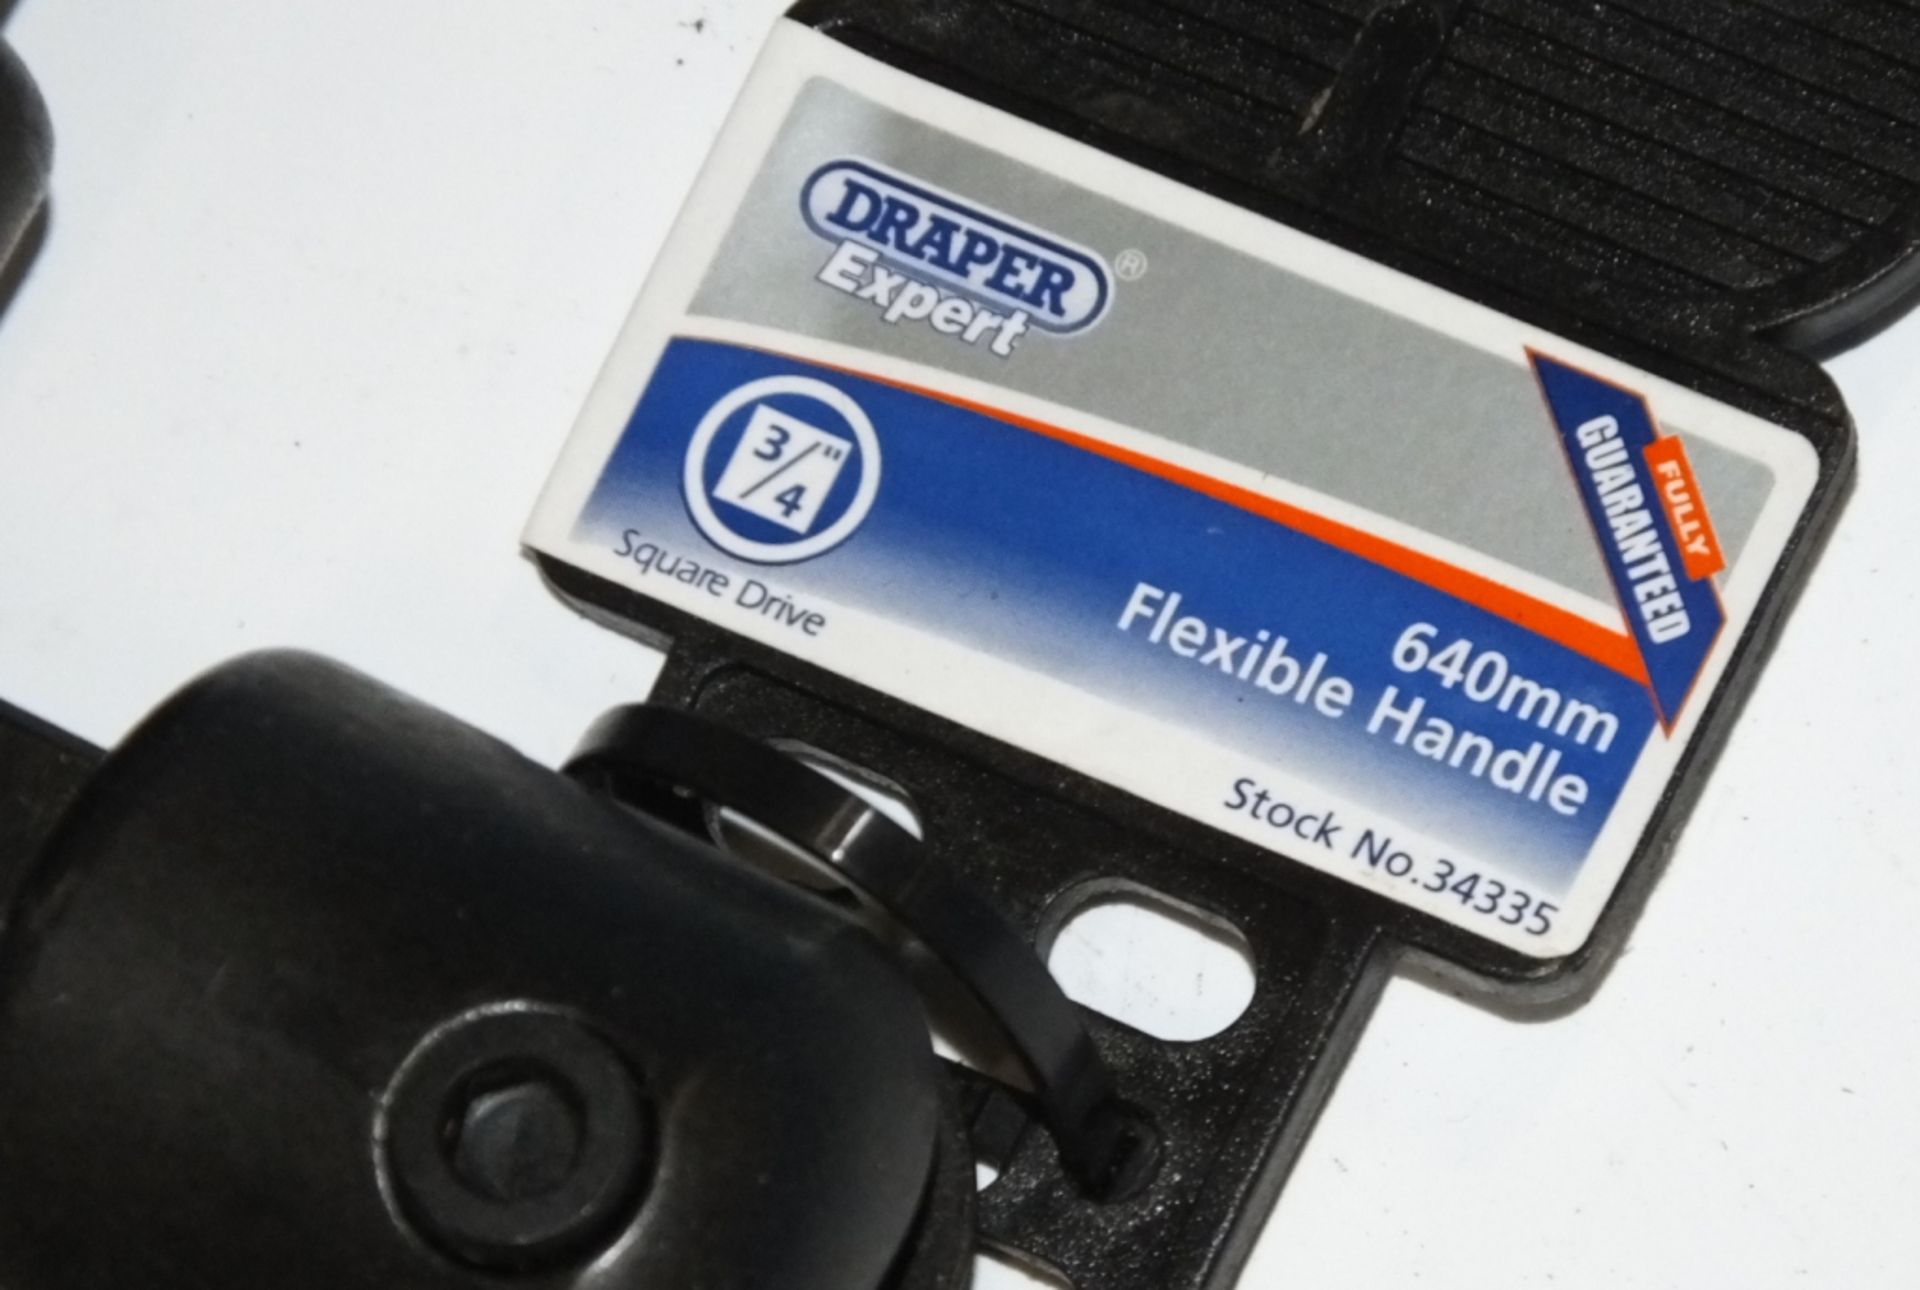 2x Draper 640mm Flexible handles - 3/4" Drive - Image 3 of 3